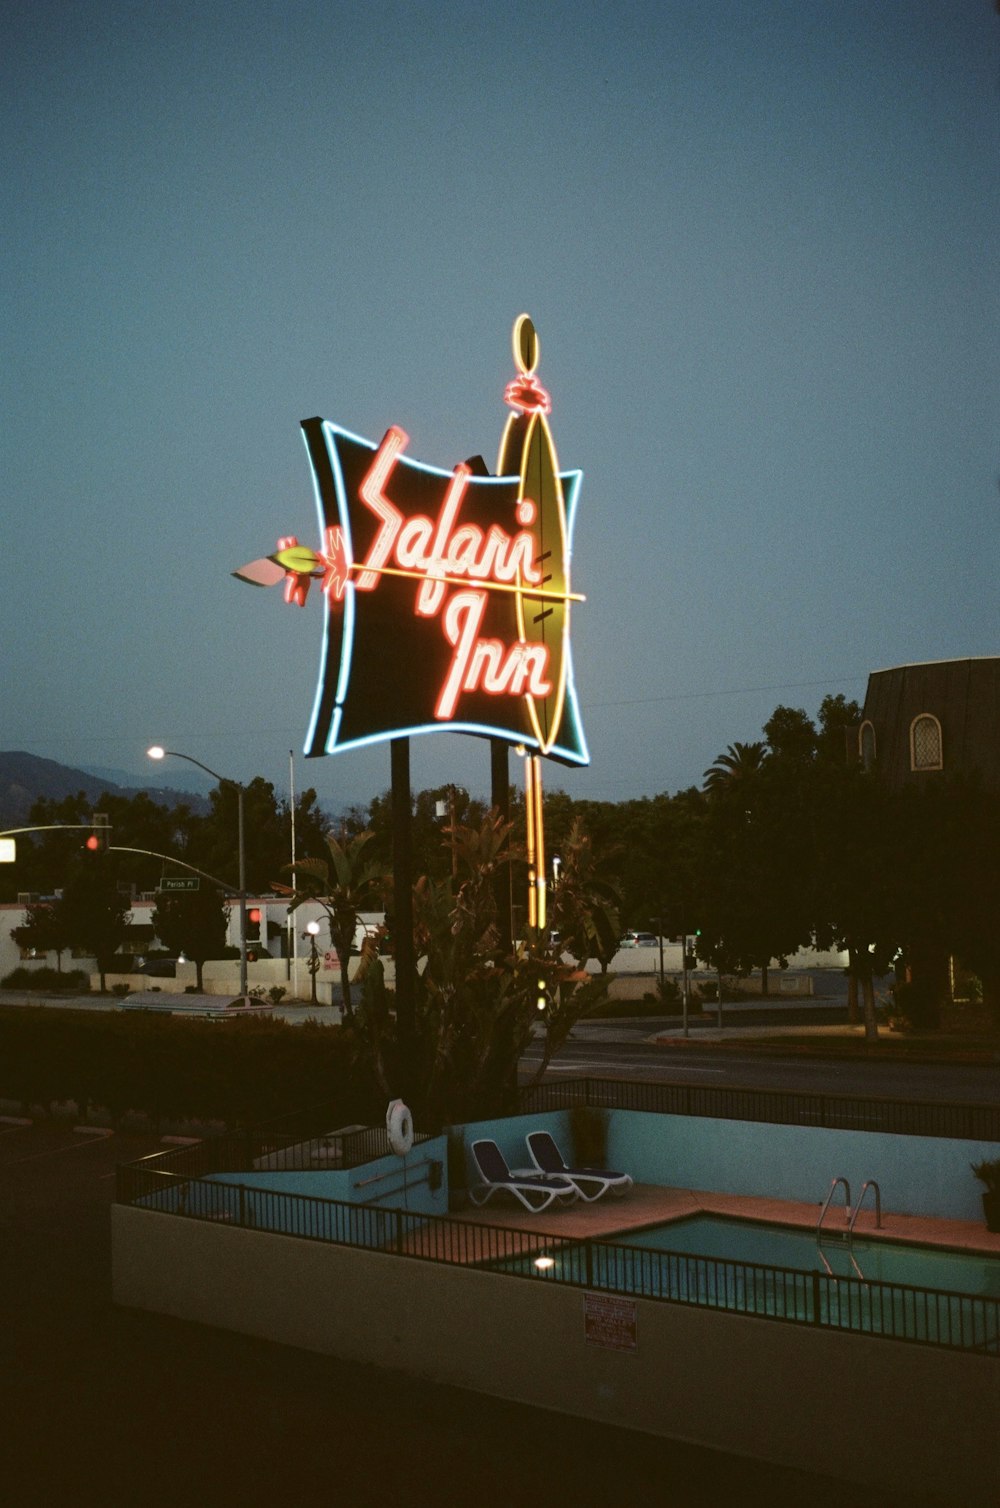 a large neon sign that says italian inn